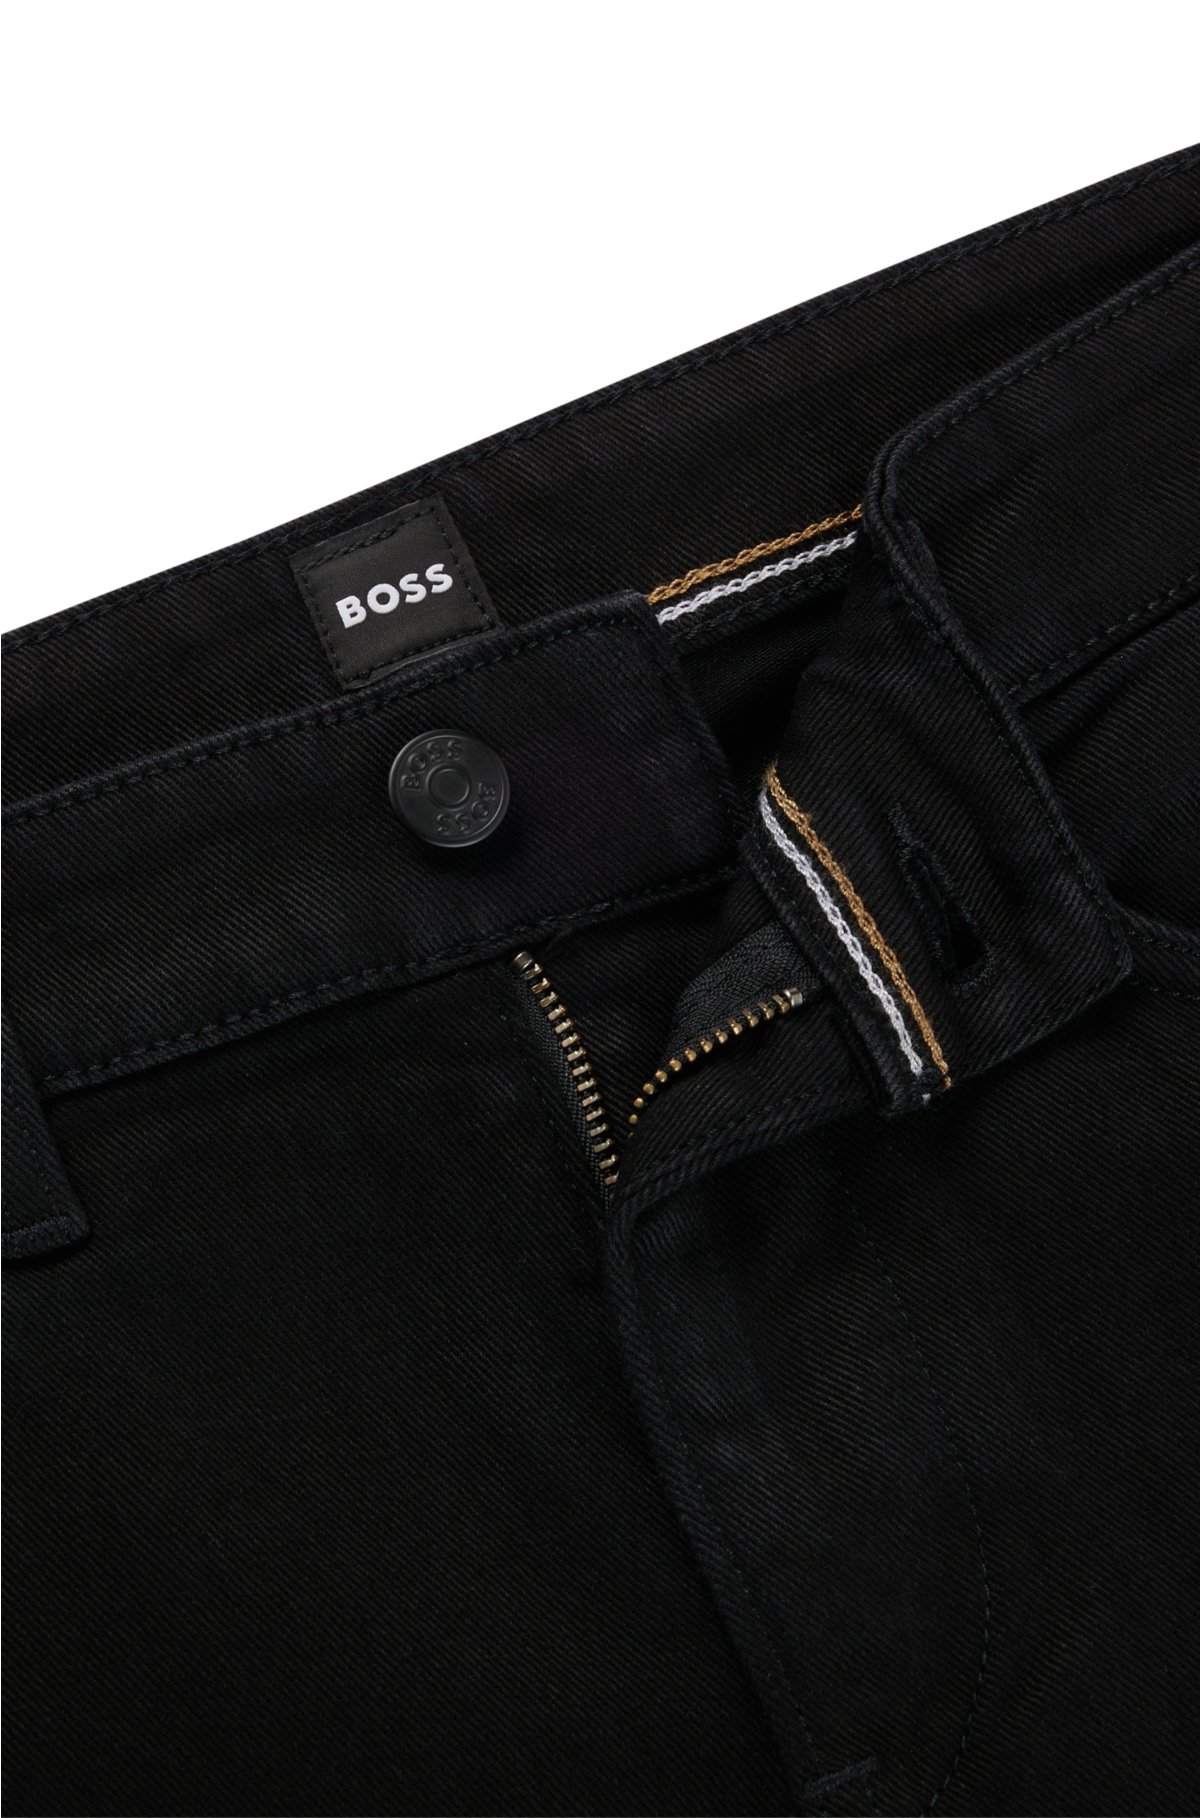 konkurs dart Observere BOSS - Slim-fit jeans in black super-soft Italian denim